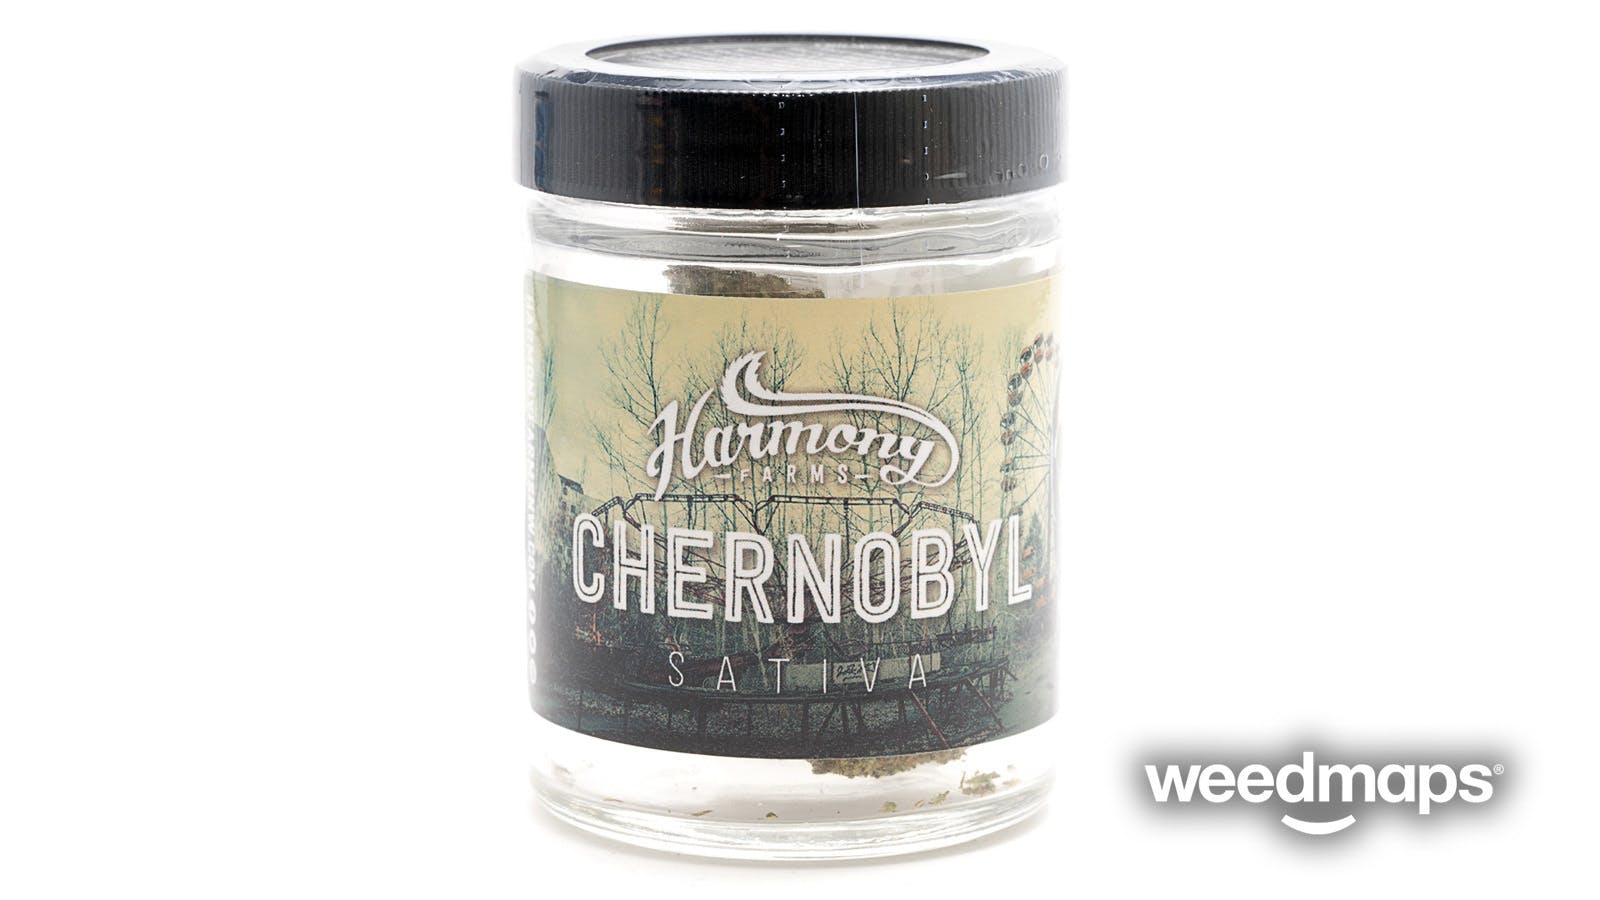 marijuana-dispensaries-mainea-c2-80-c2-99s-alternative-caring-in-windham-chernobyl